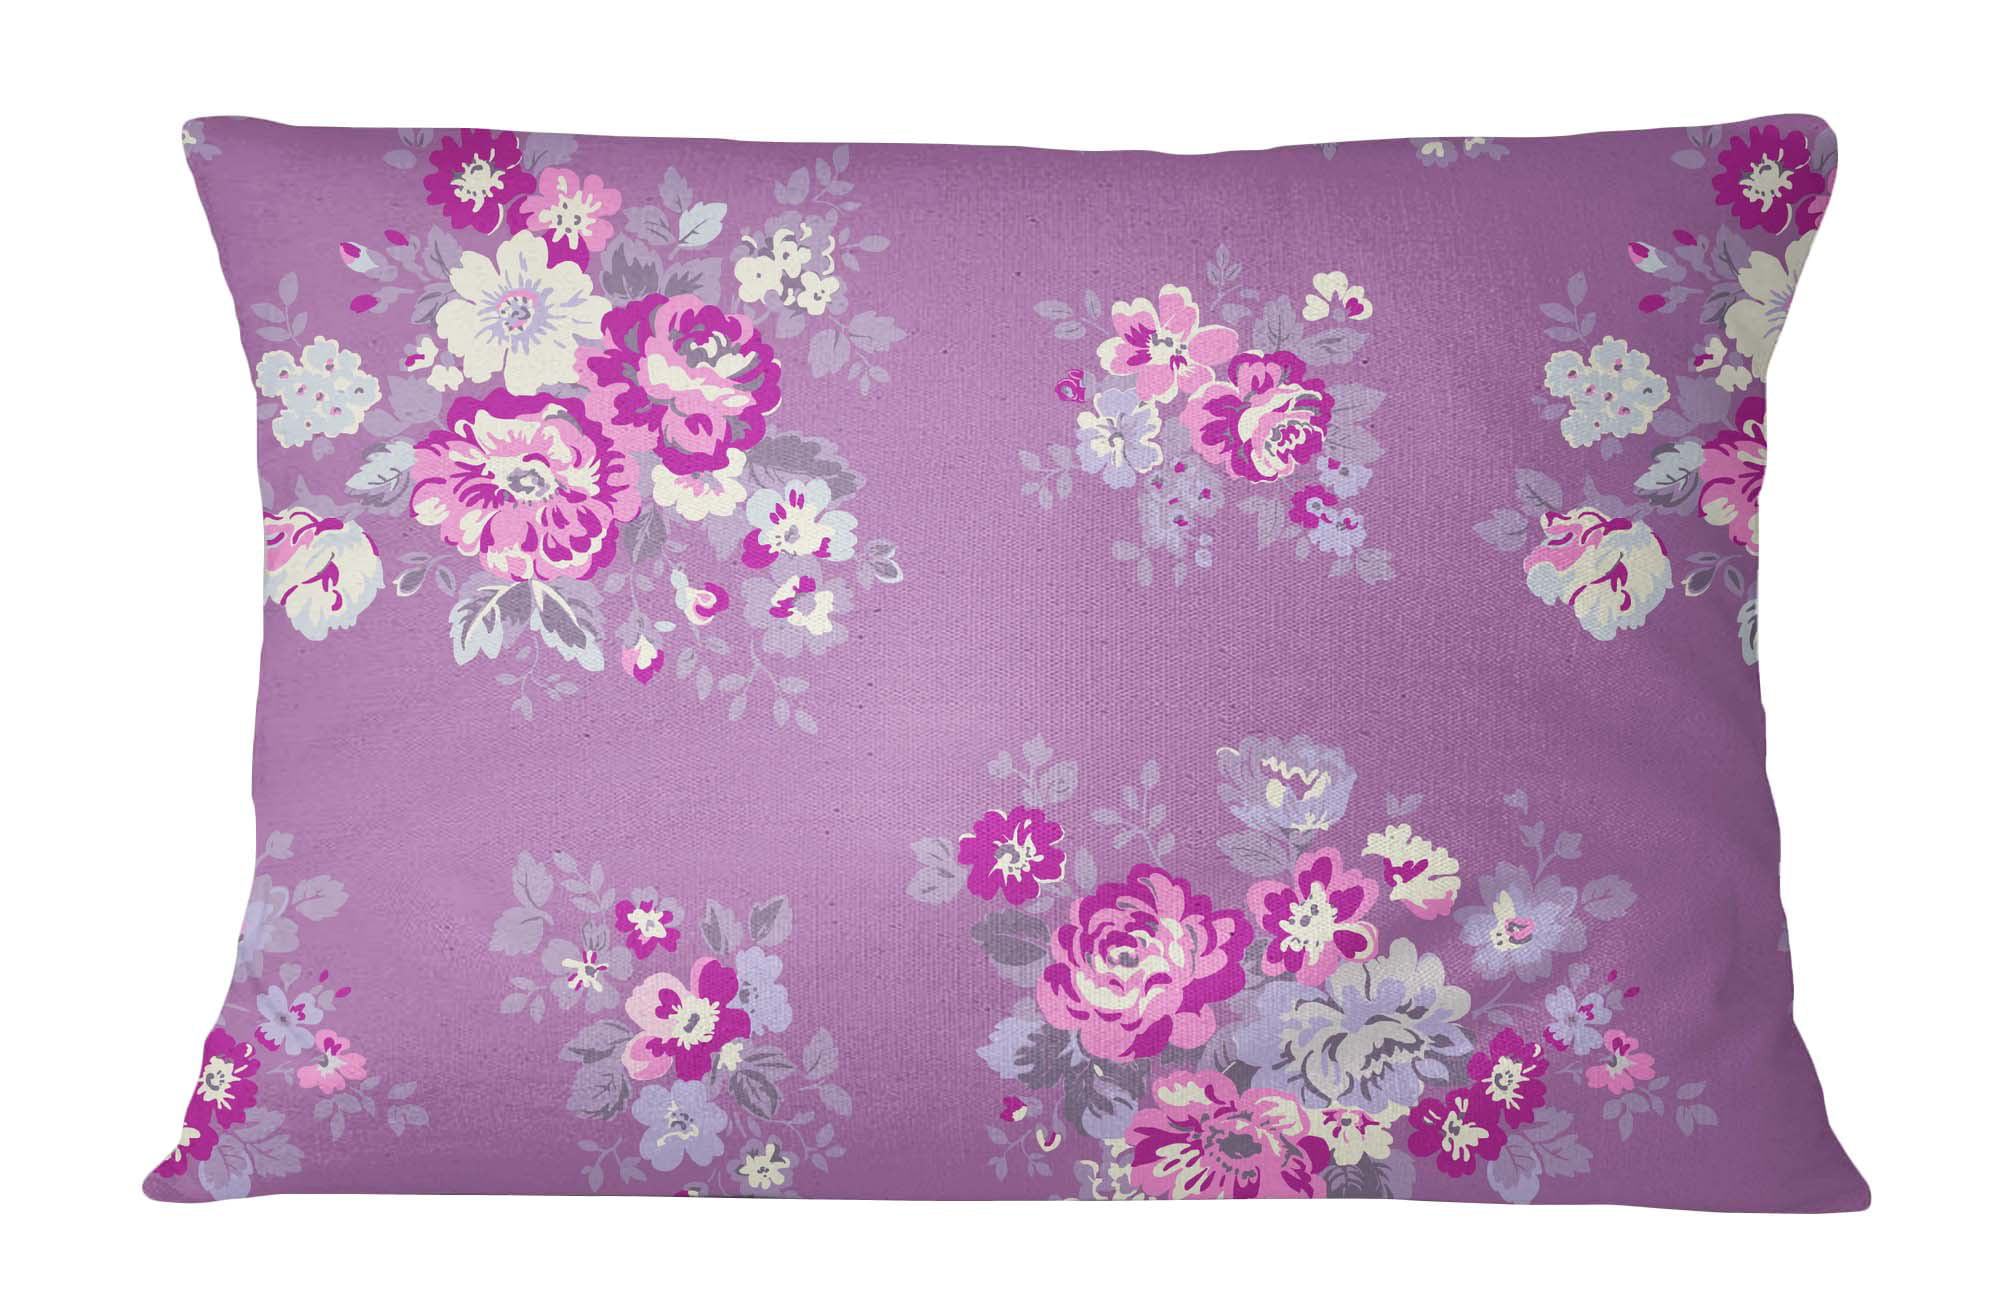 Details about   S4Sassy Floral Print Cotton Poplin 2 Pcs Rectangle  Pillow Sham Cushion Cover 